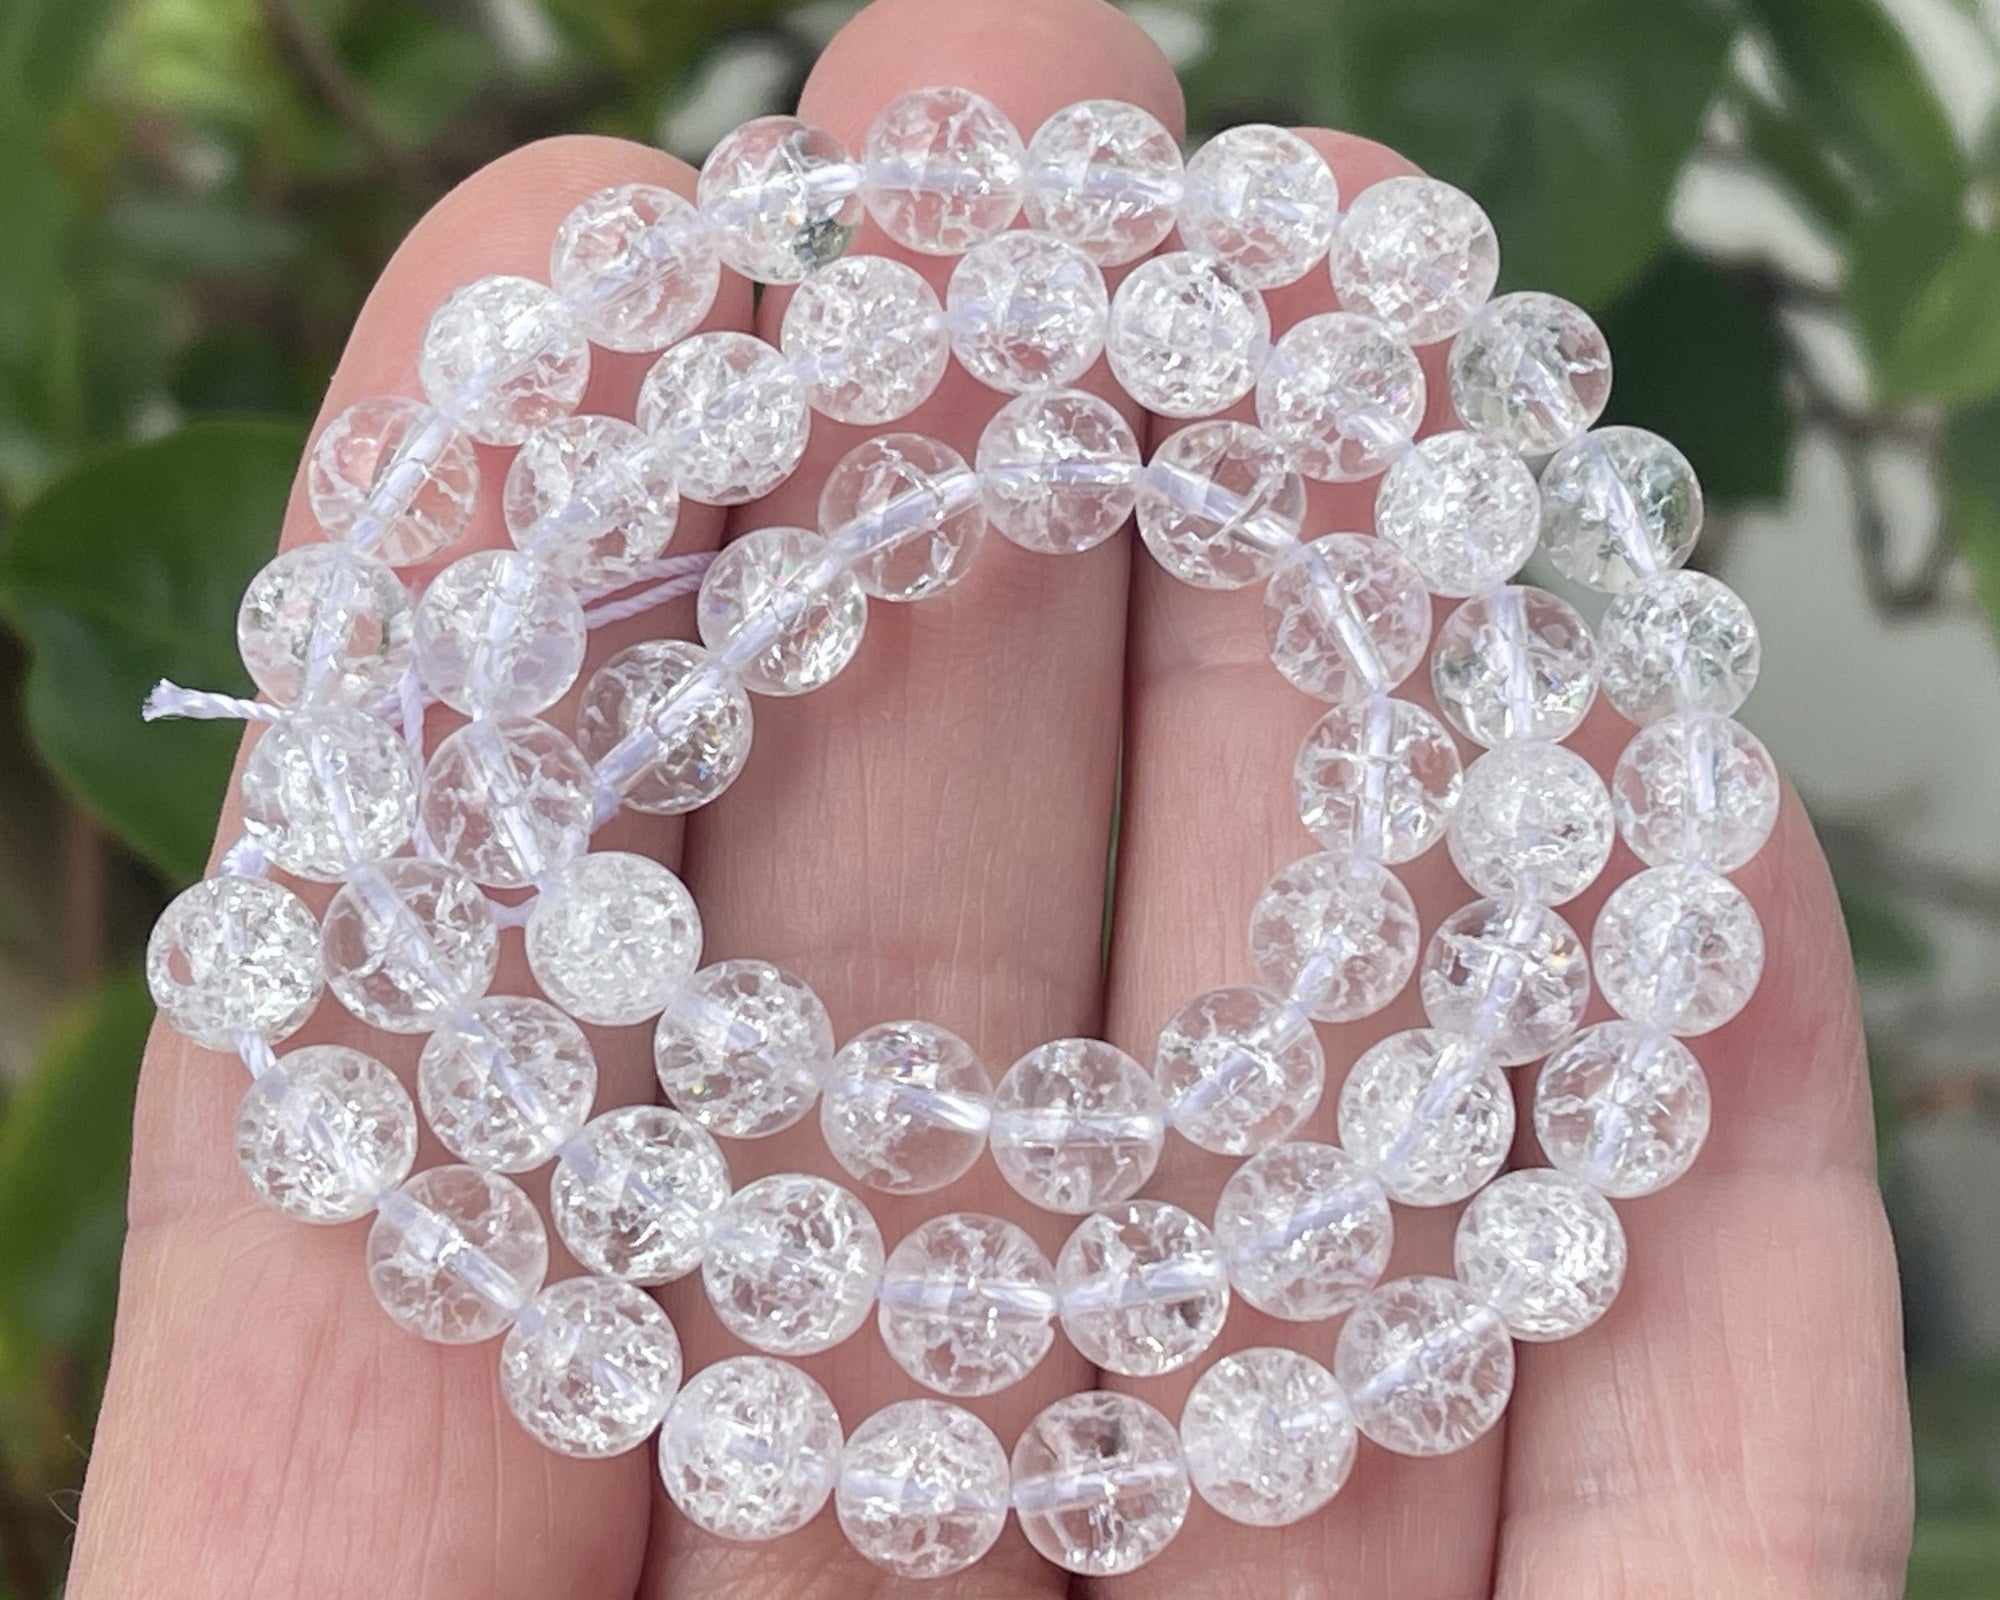 Cracked Quartz 6mm round natural rock crystal beads 15" strand - Oz Beads 